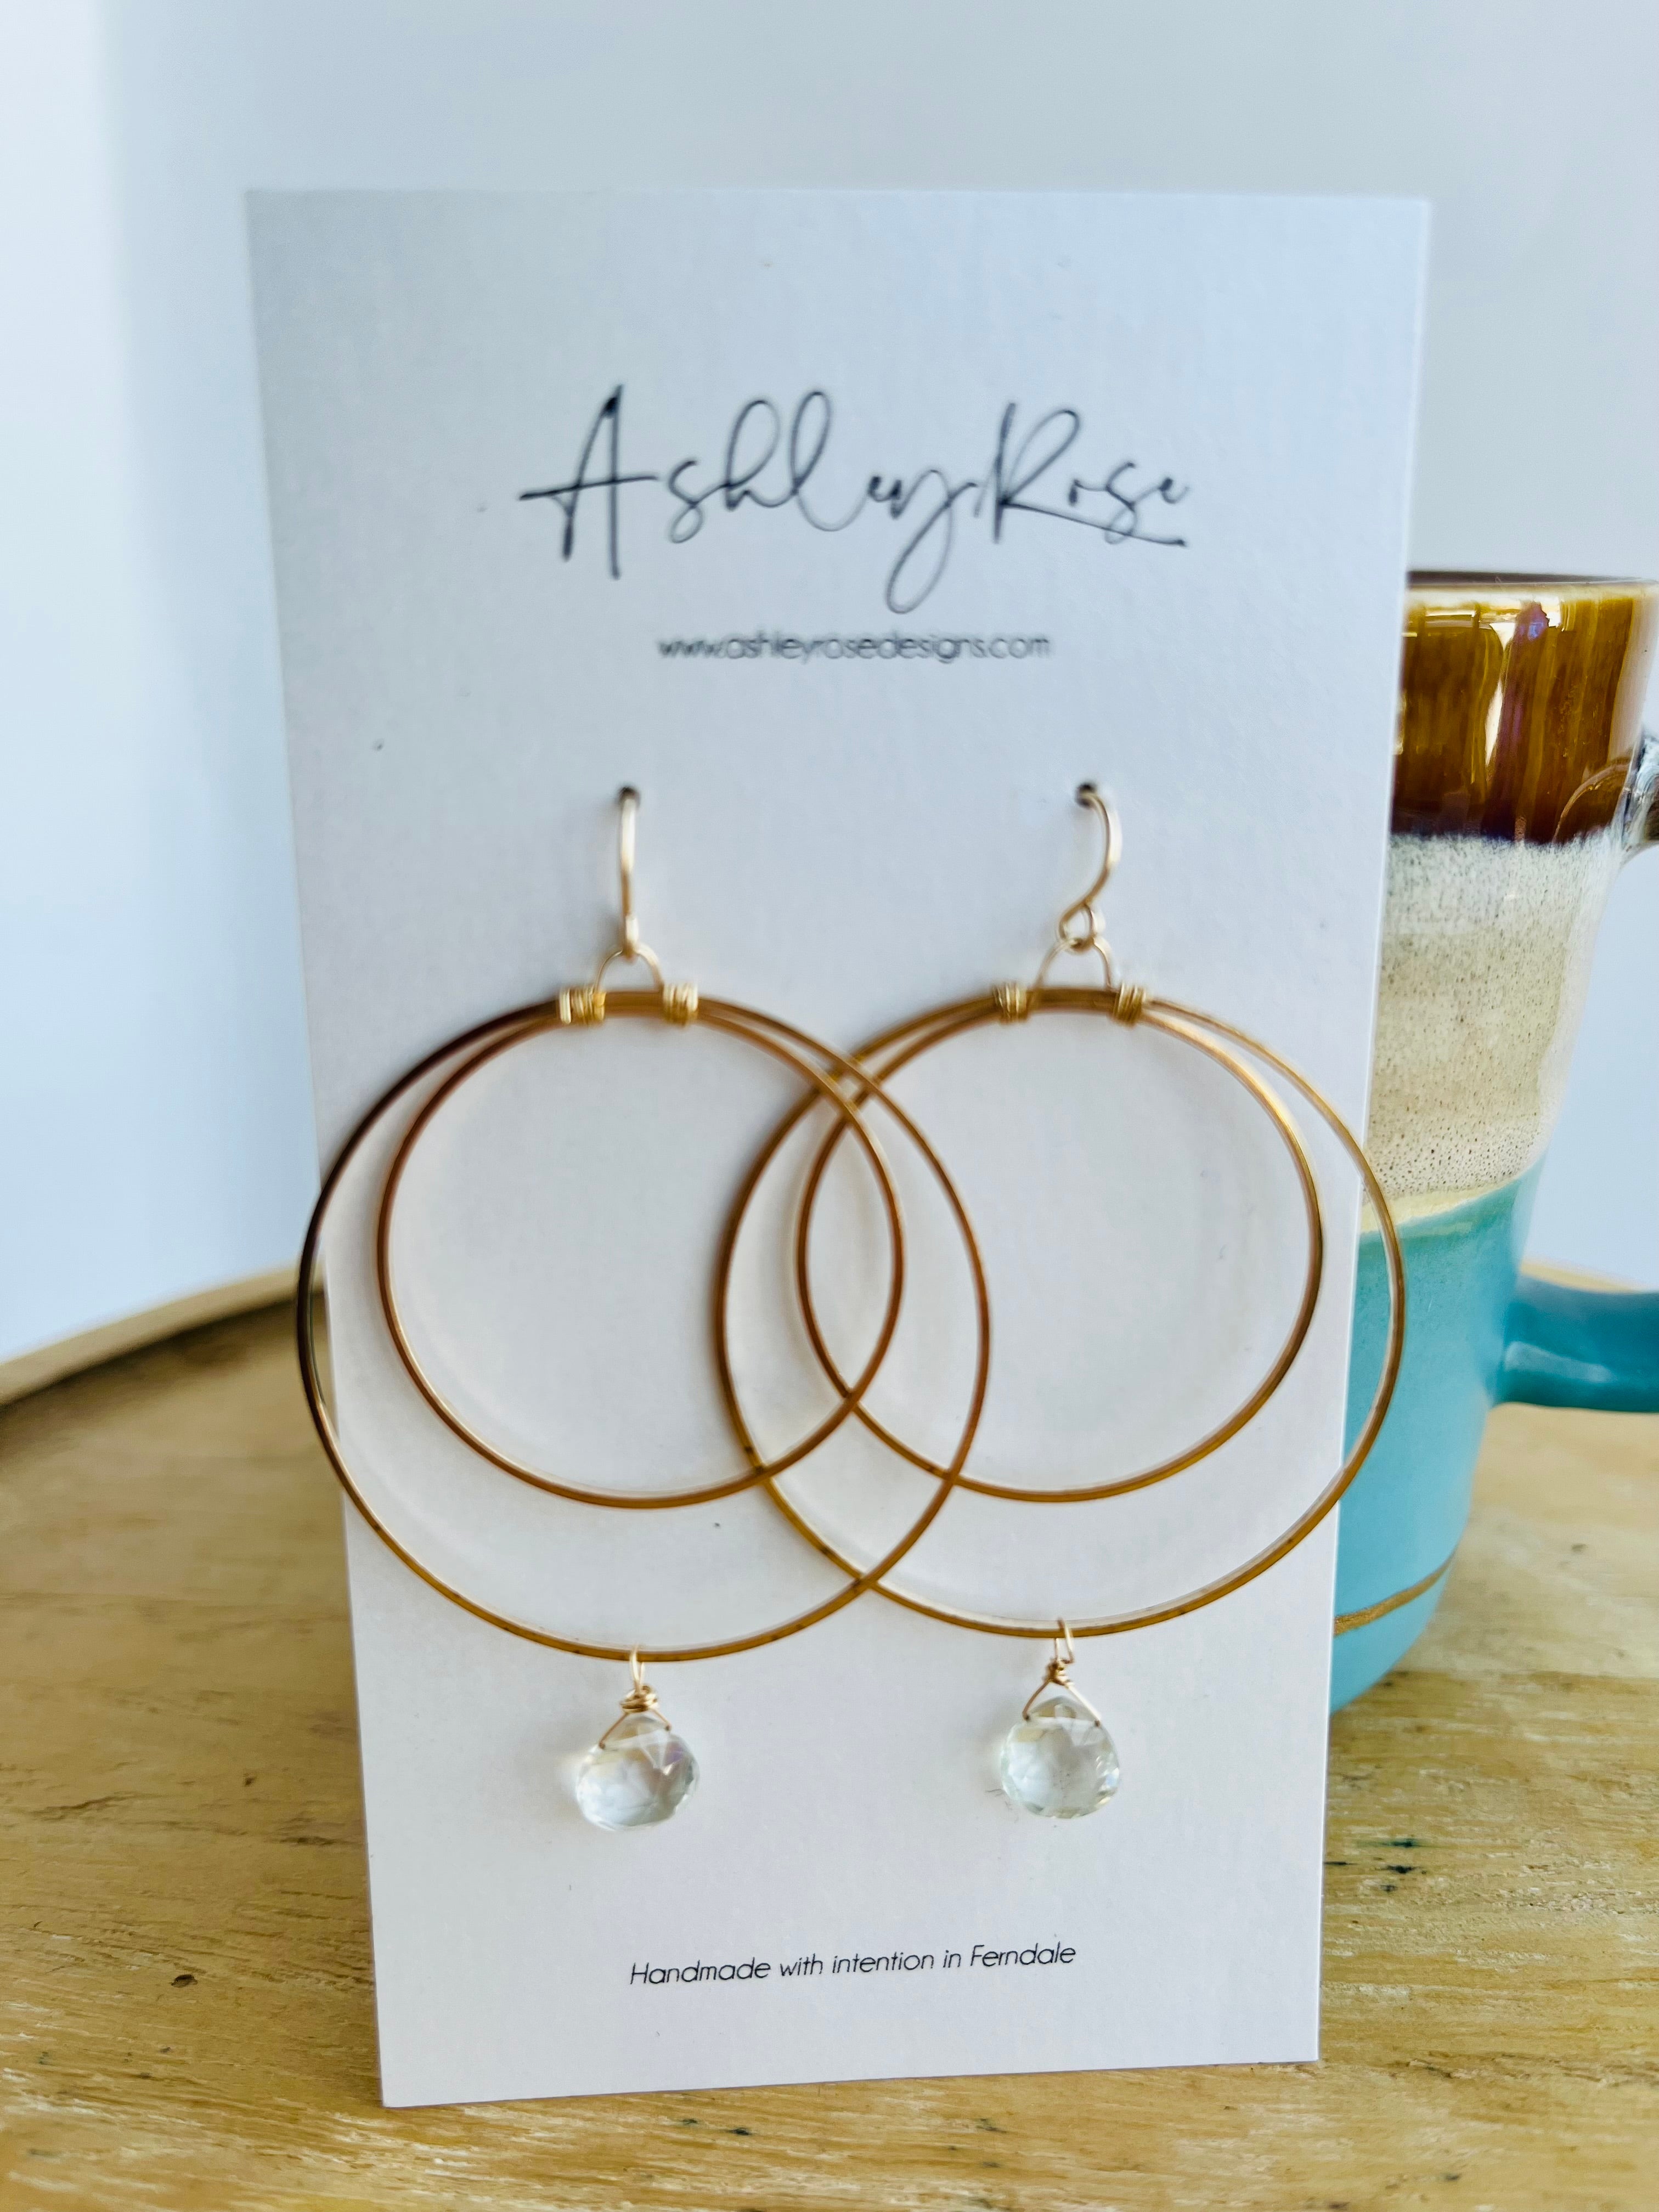 Halo Green Amethyst gold - Ashley Rose earrings